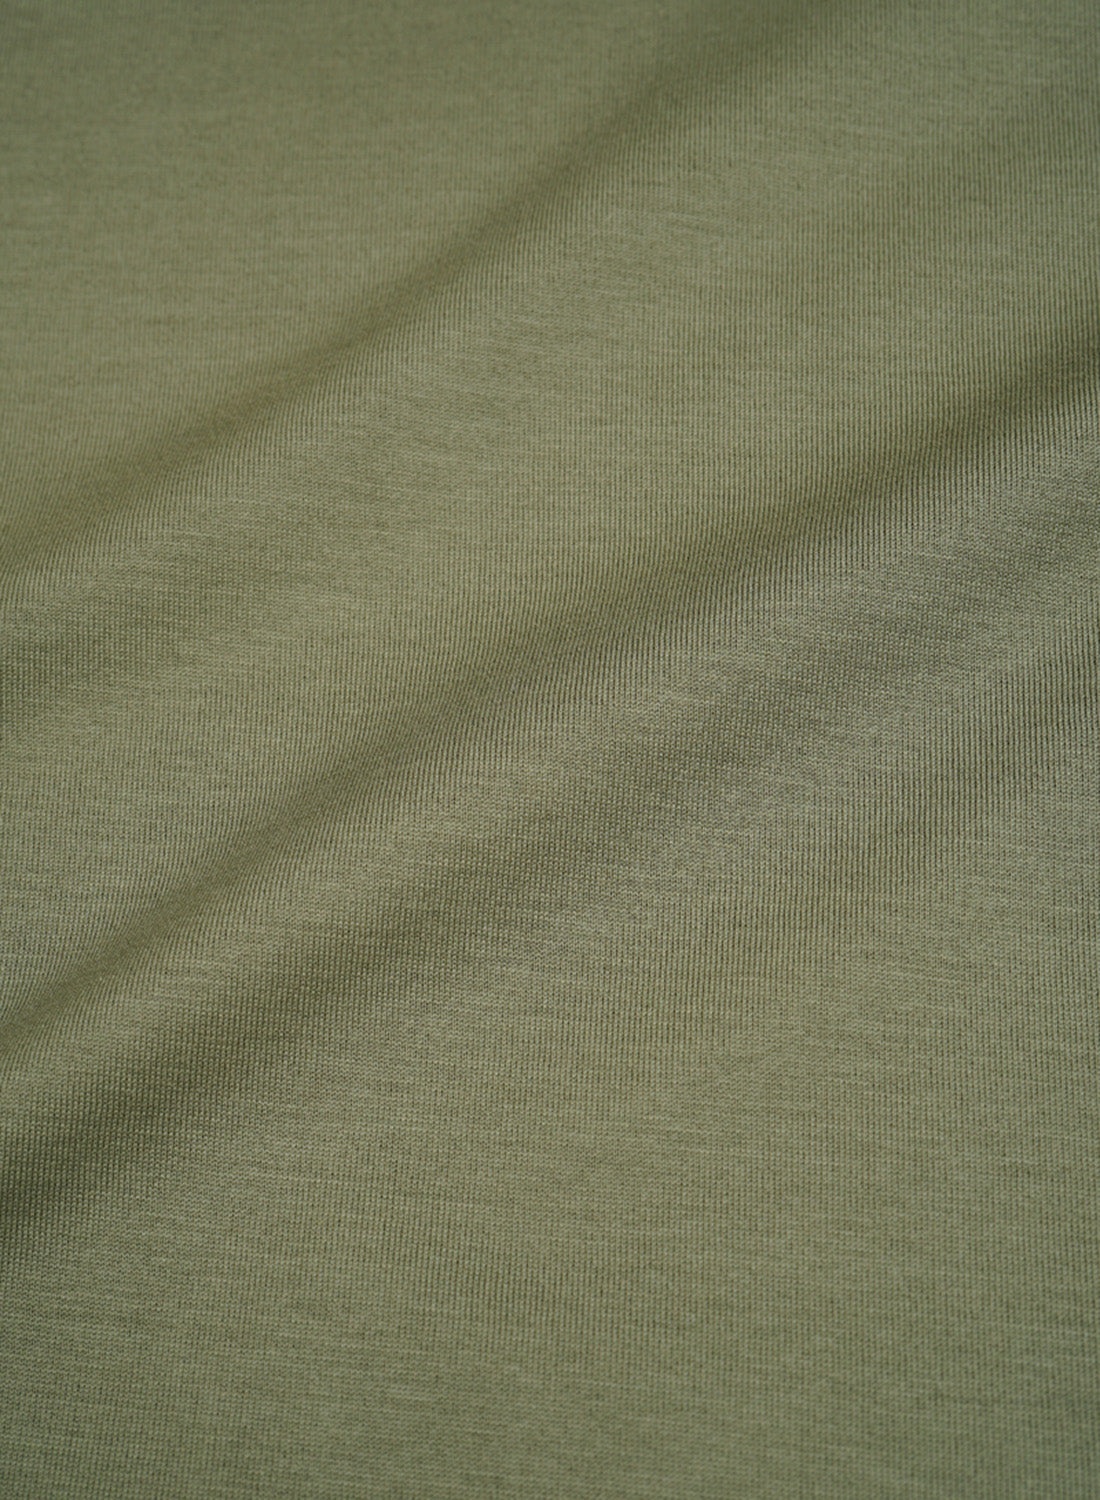 Nigel Cabourn x Sunspel Long Sleeve Pocket T-Shirt in Army Green - 8